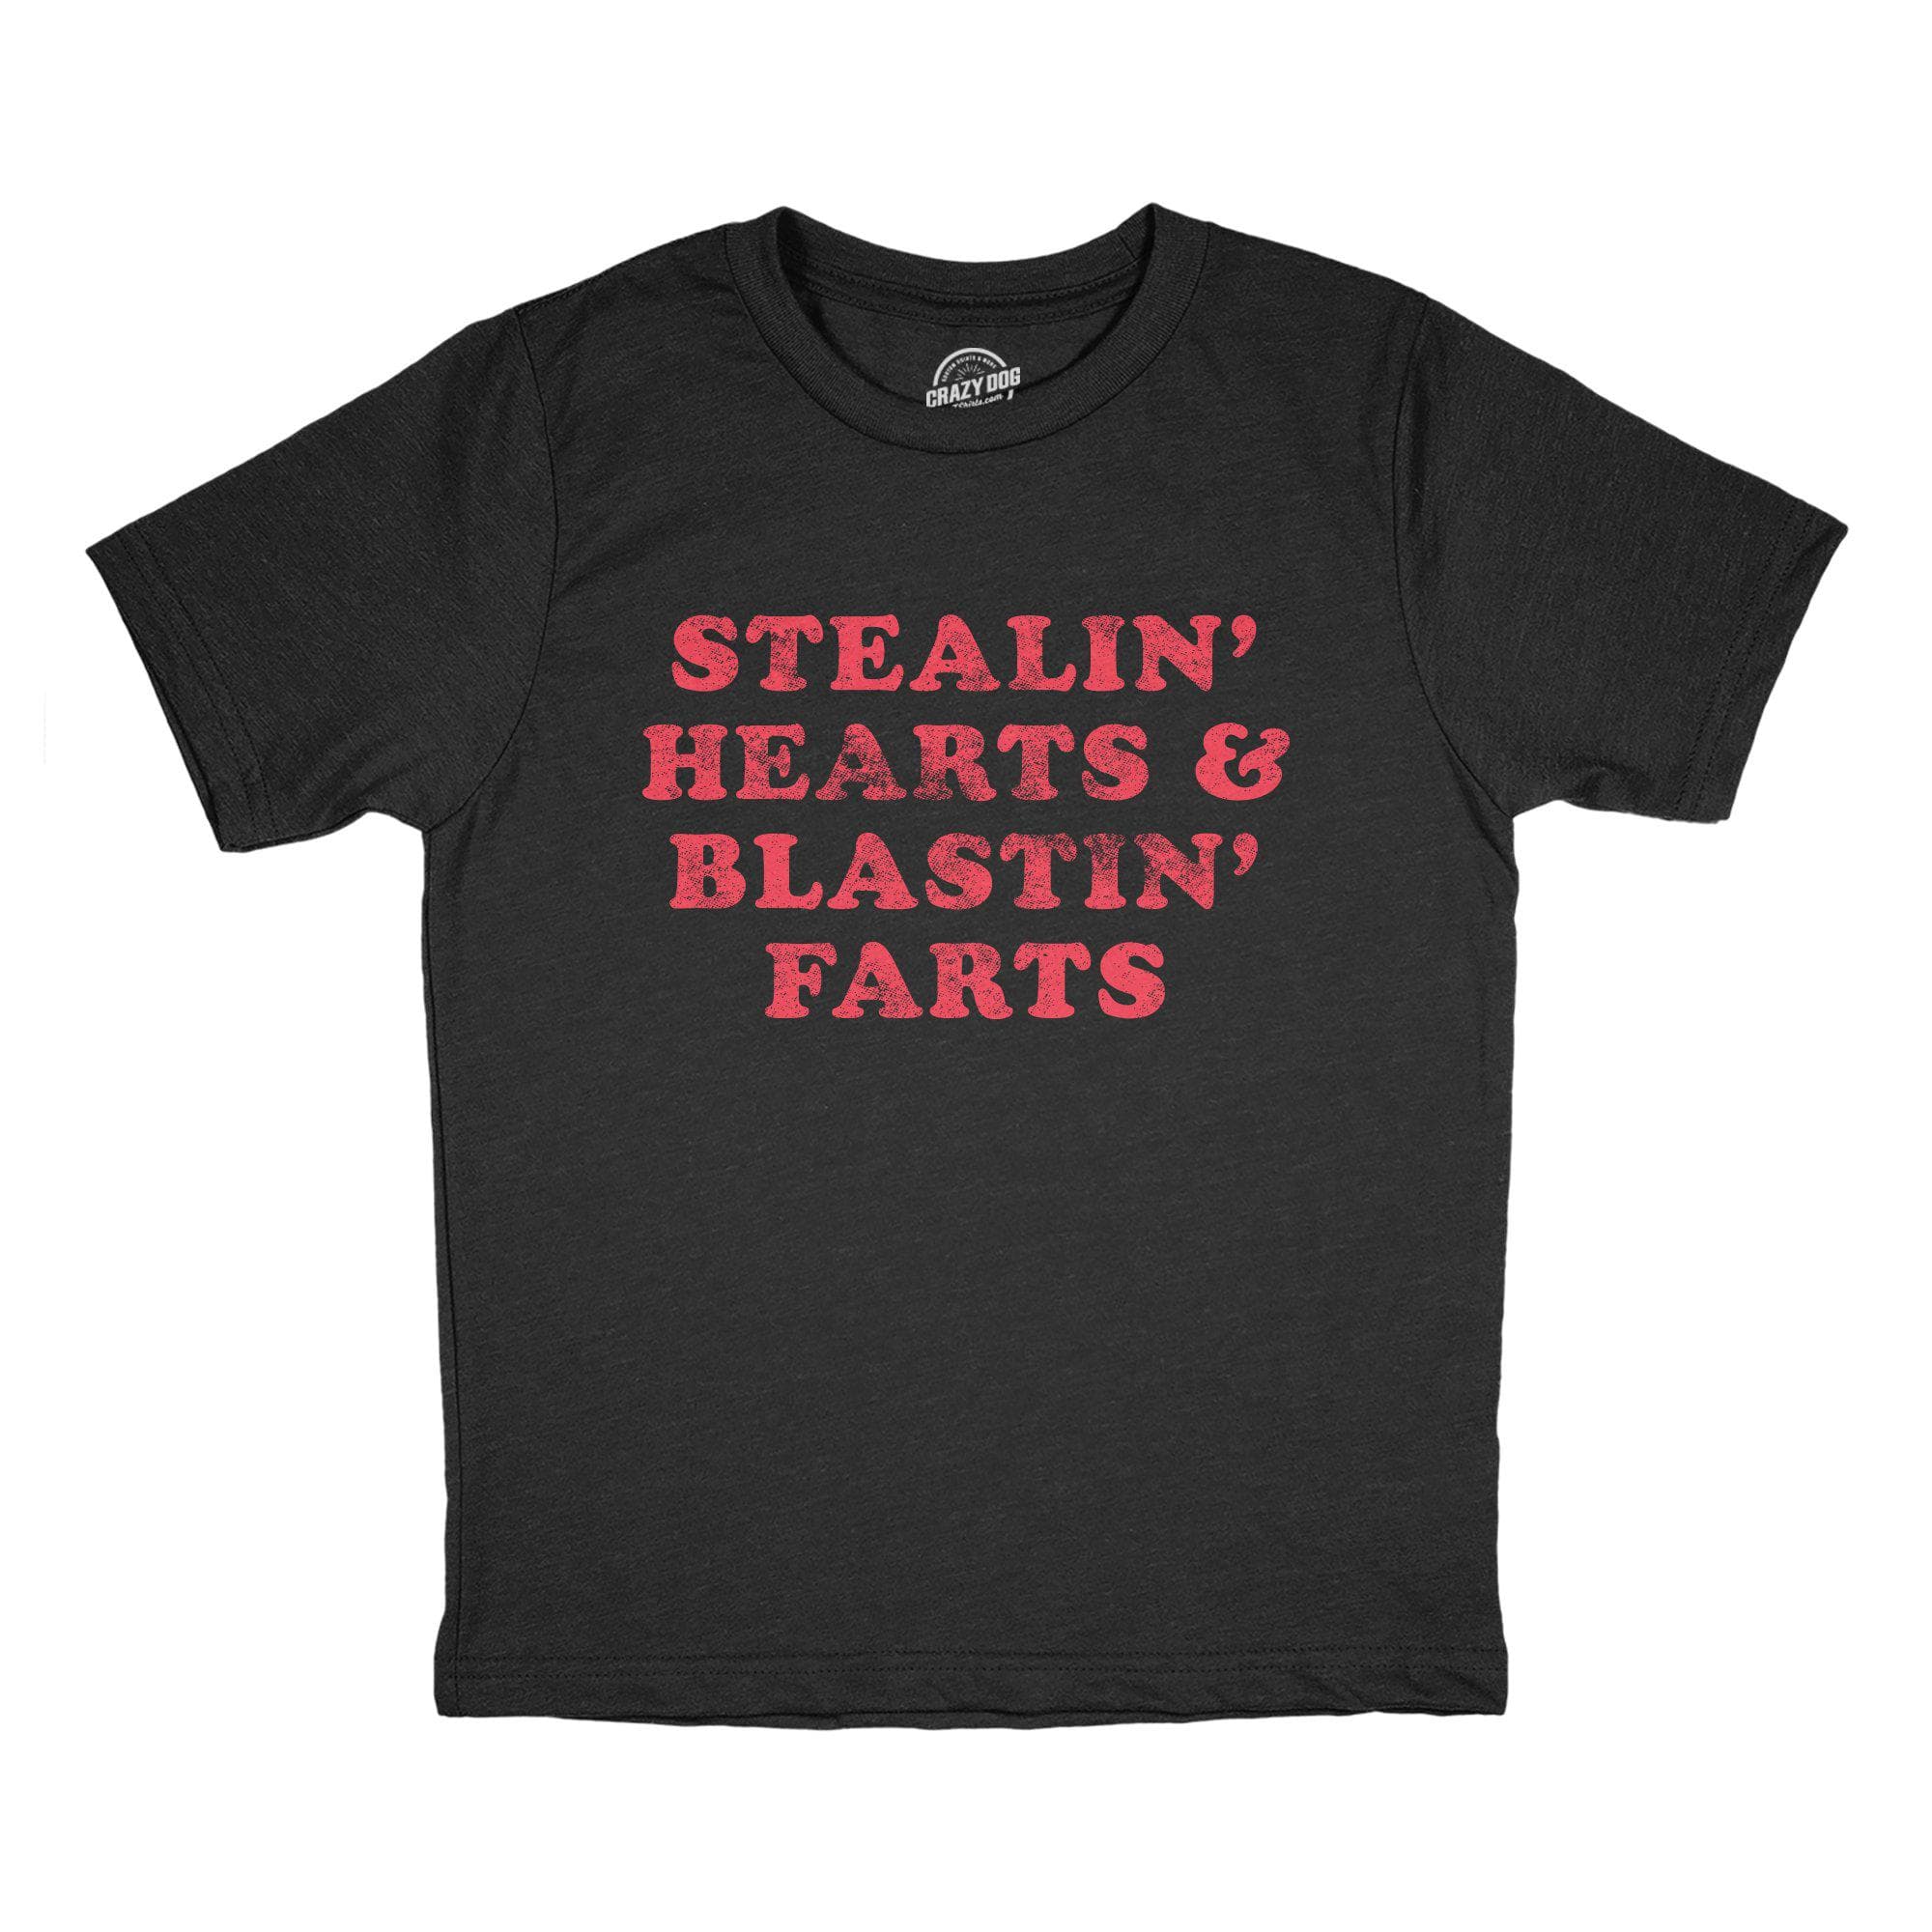 Stealin' Hearts And Blastin' Farts Youth Tshirt - Crazy Dog T-Shirts